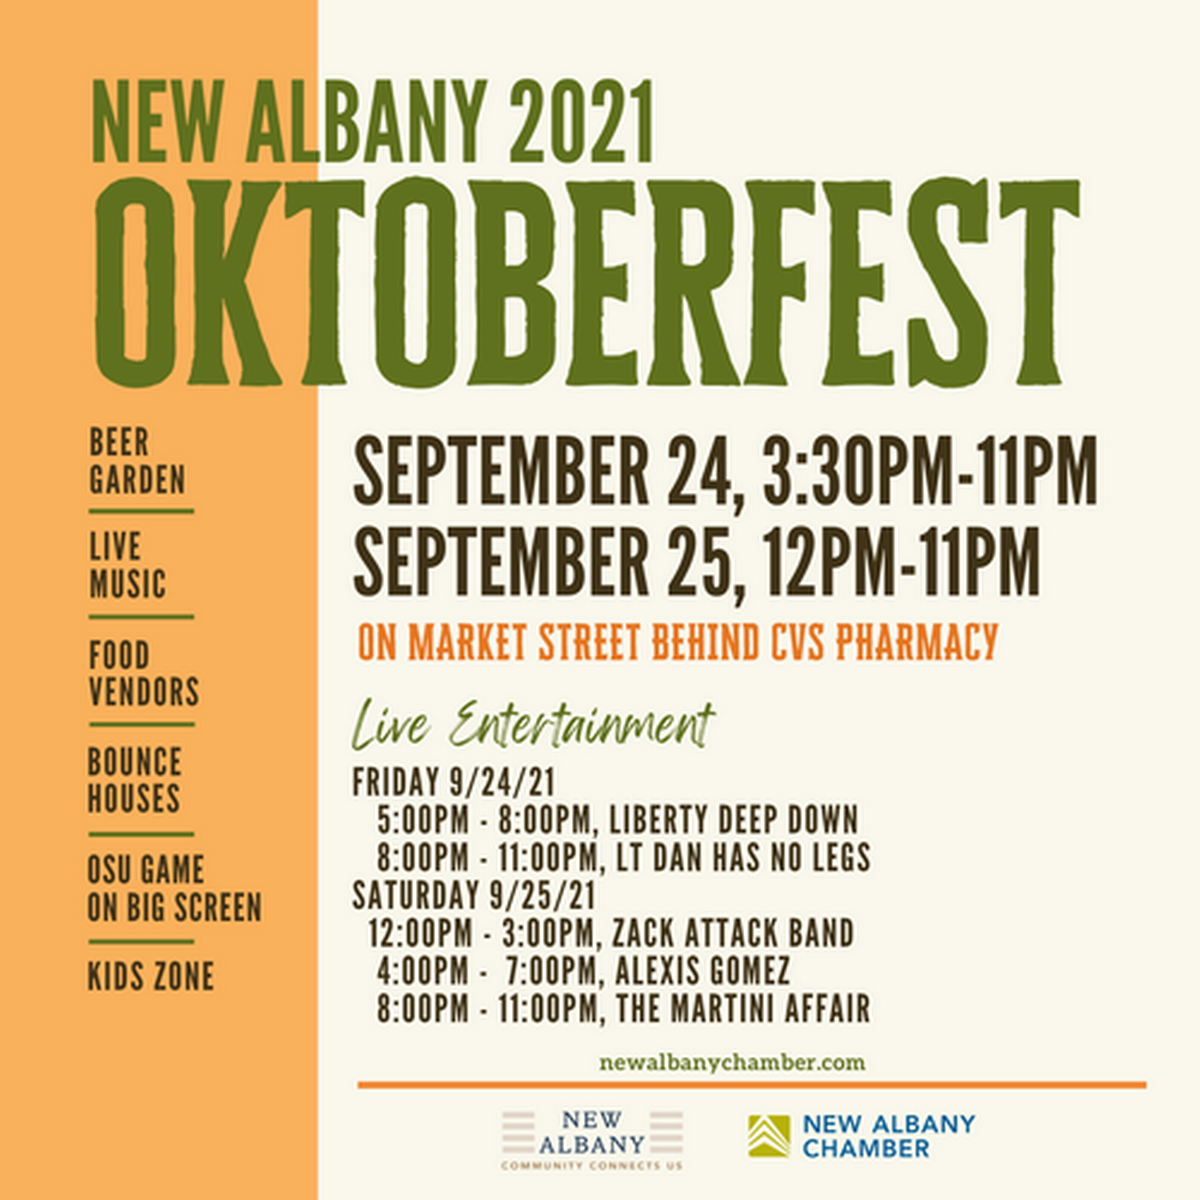 Oktoberfest Sep 24, 2021 to Sep 25, 2021